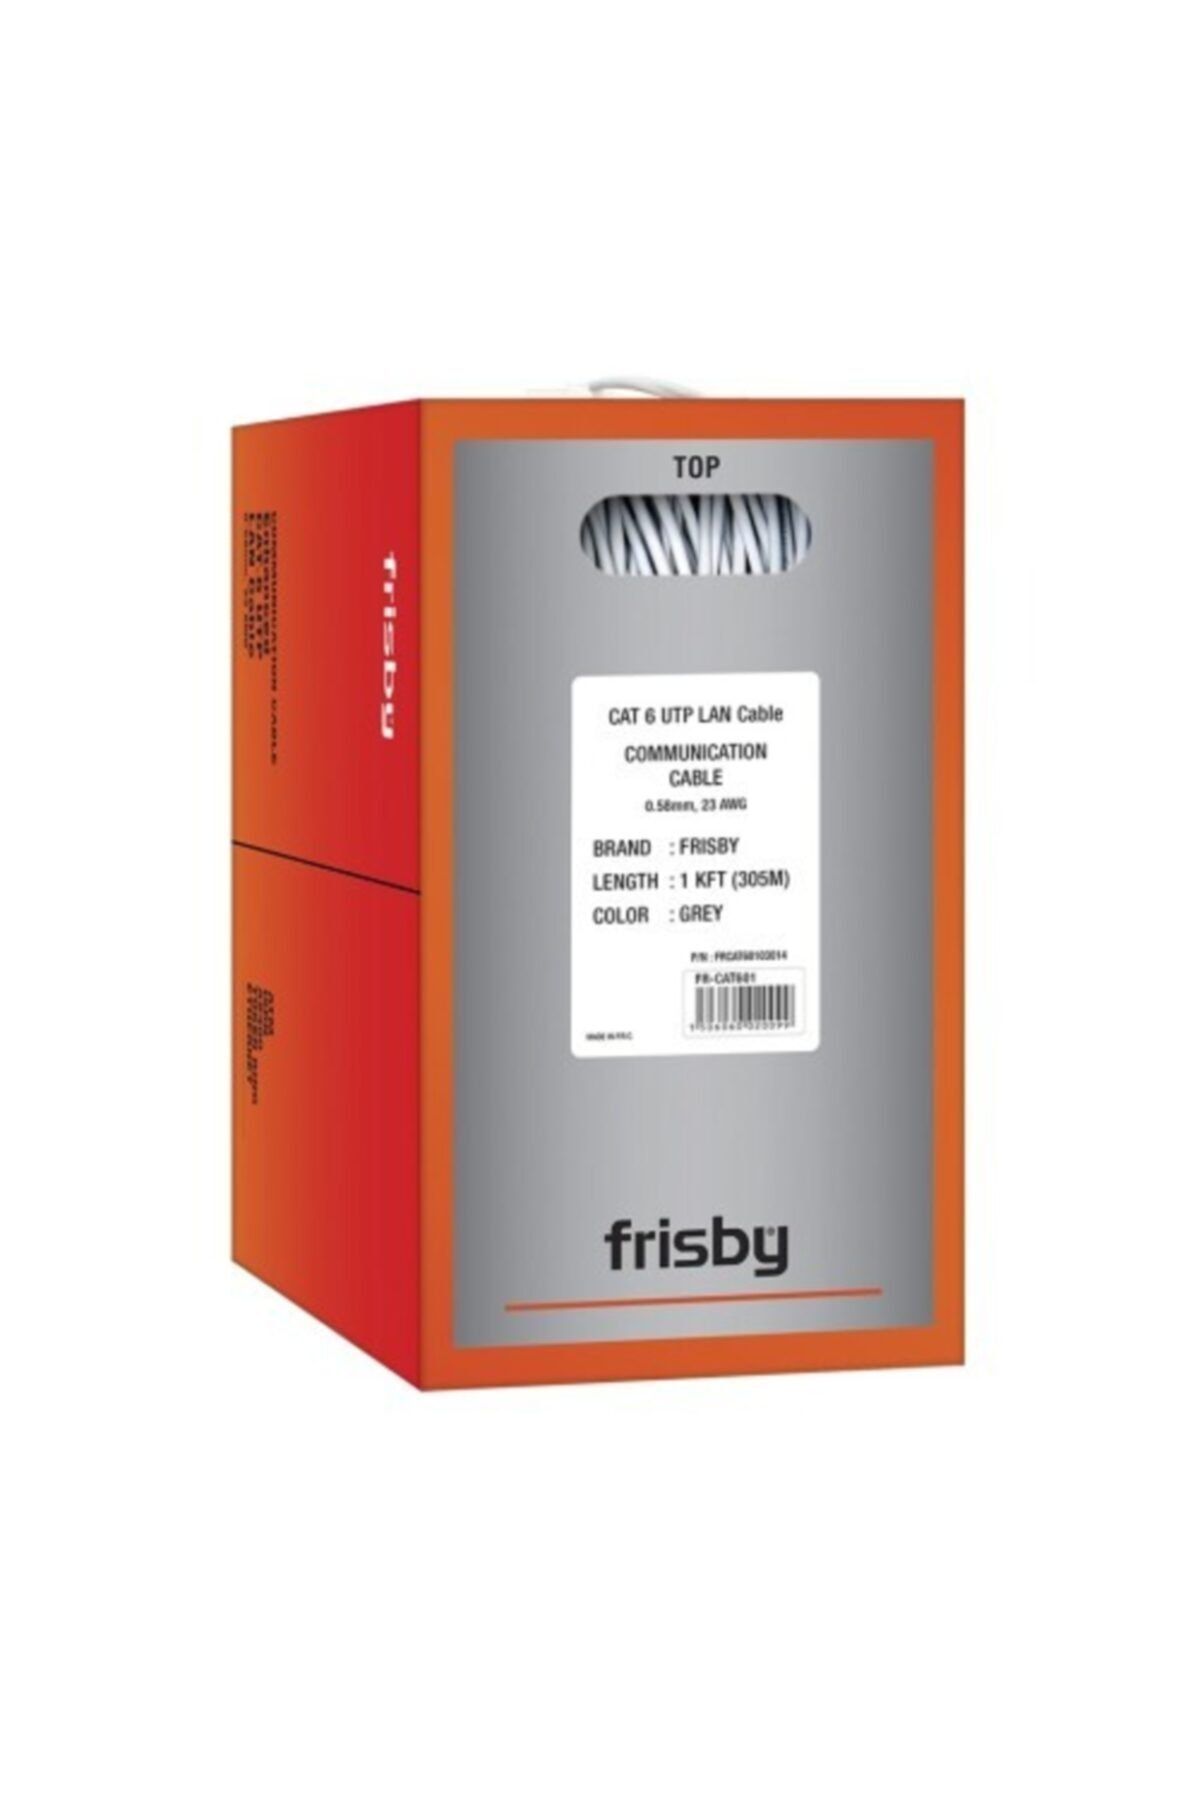 Frisby Fr-cat601 305m Cat 6 Kablo Utp 23 Awg 0.58mm Yüksek Bakır Oranlı